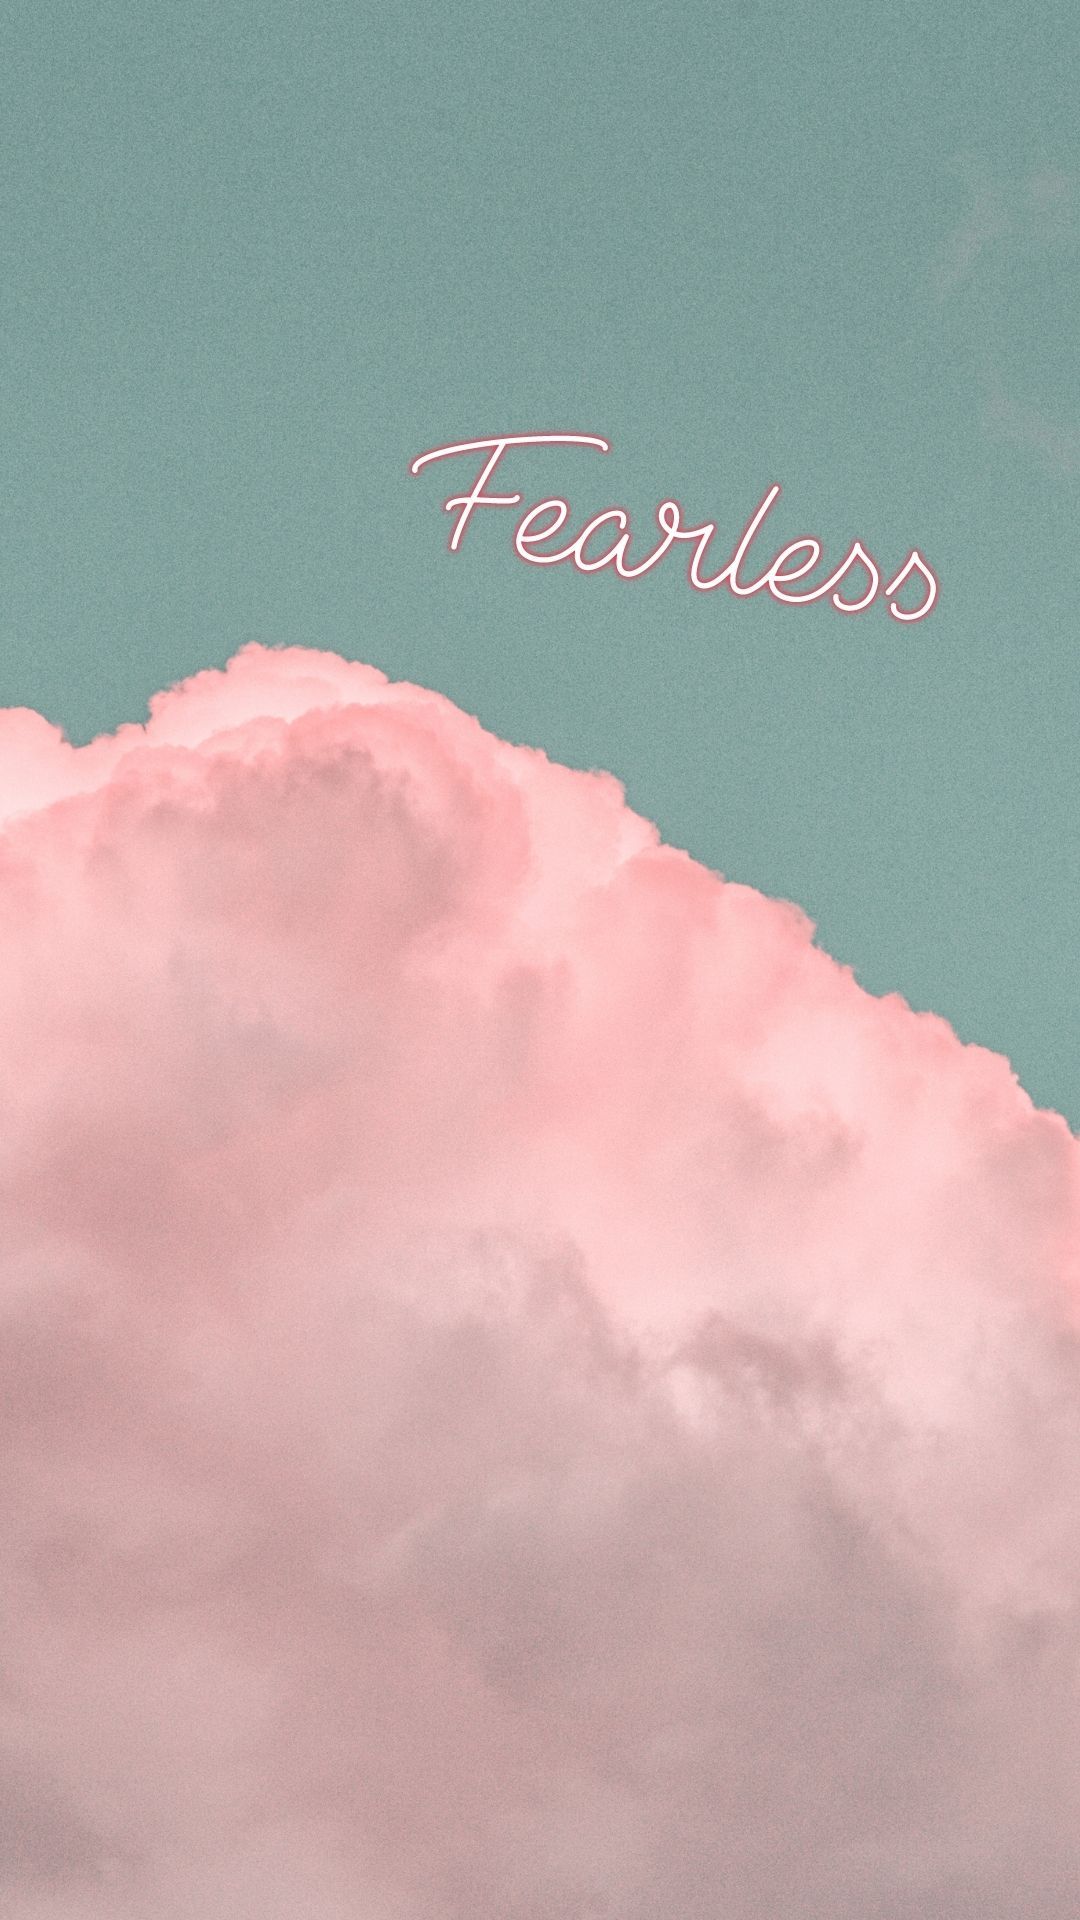 FX Fearless - Wallpaper by TheEstevezCompany on DeviantArt